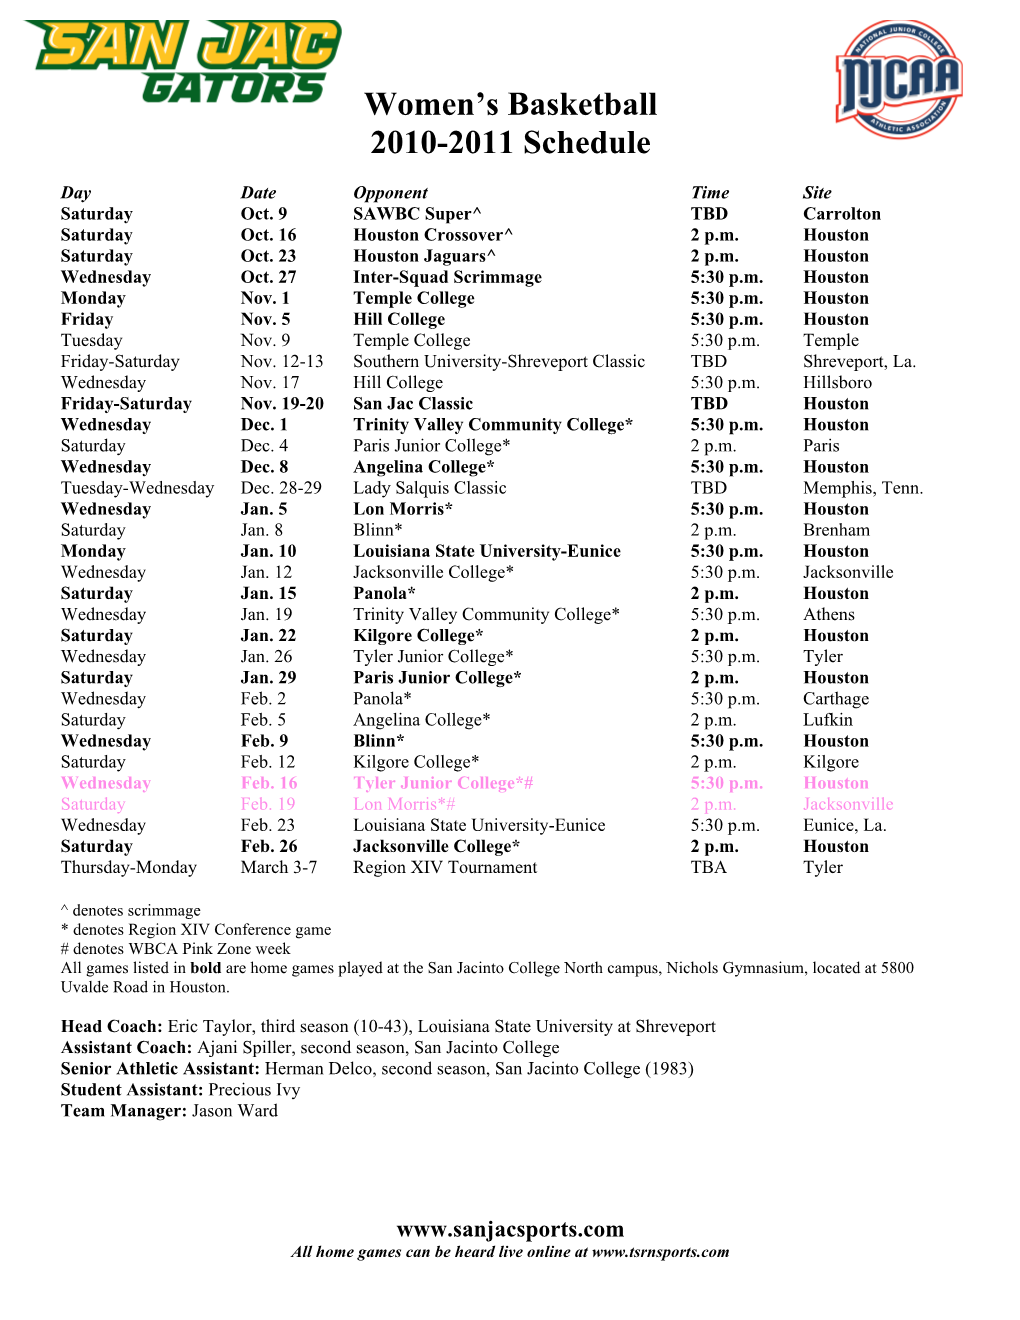 Women's Basketball 2010-2011 Schedule